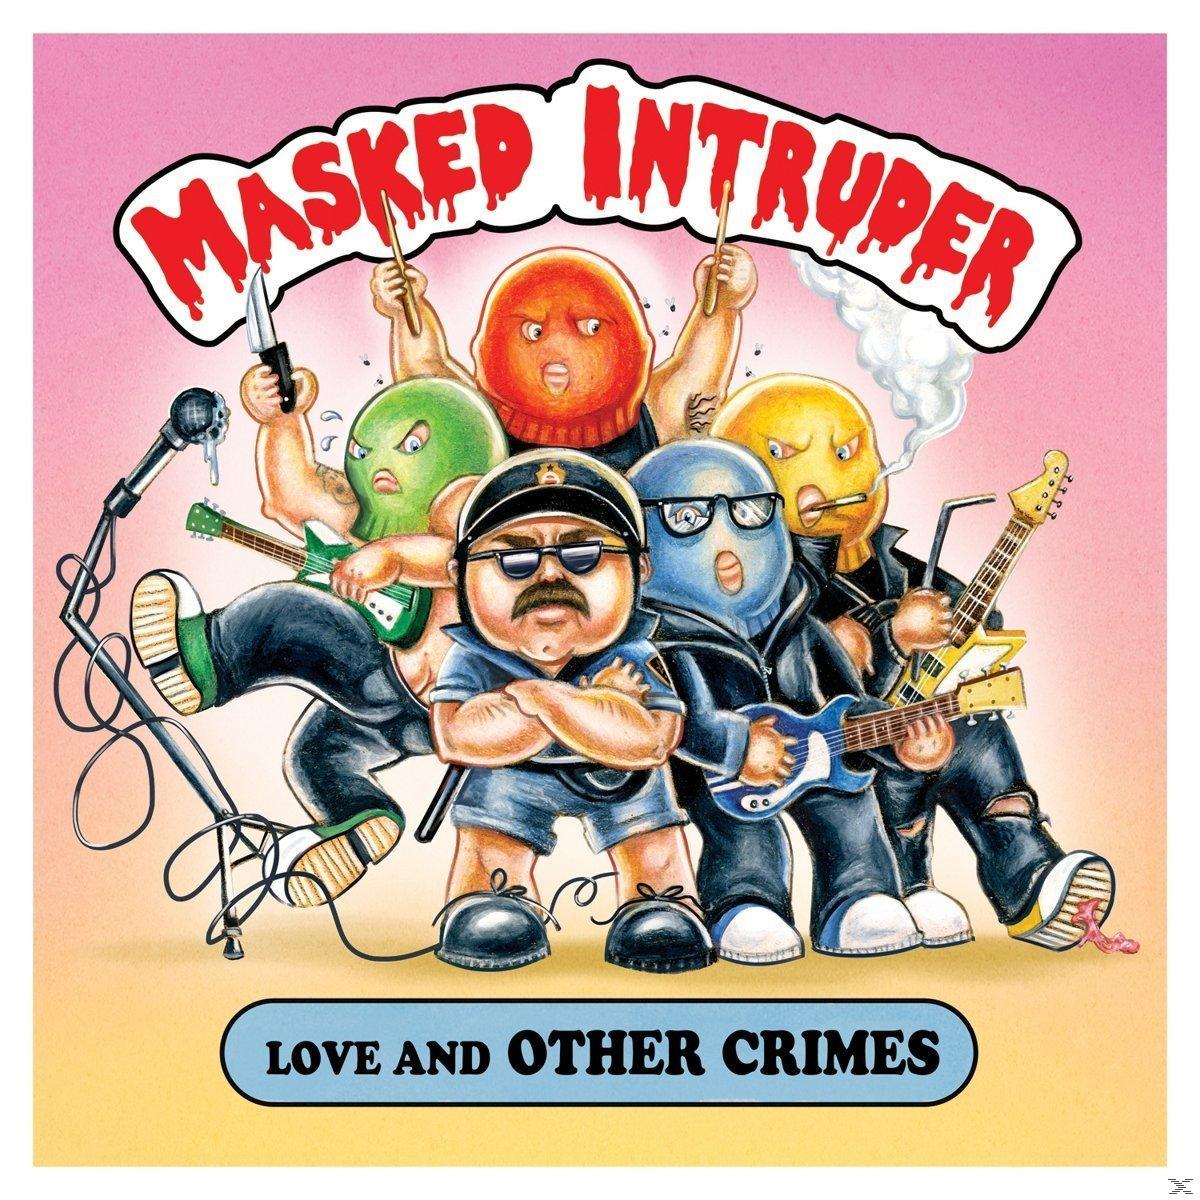 The Masked Intruder - (Ltd.Vinyl) Crimes And (Vinyl) Other Love 